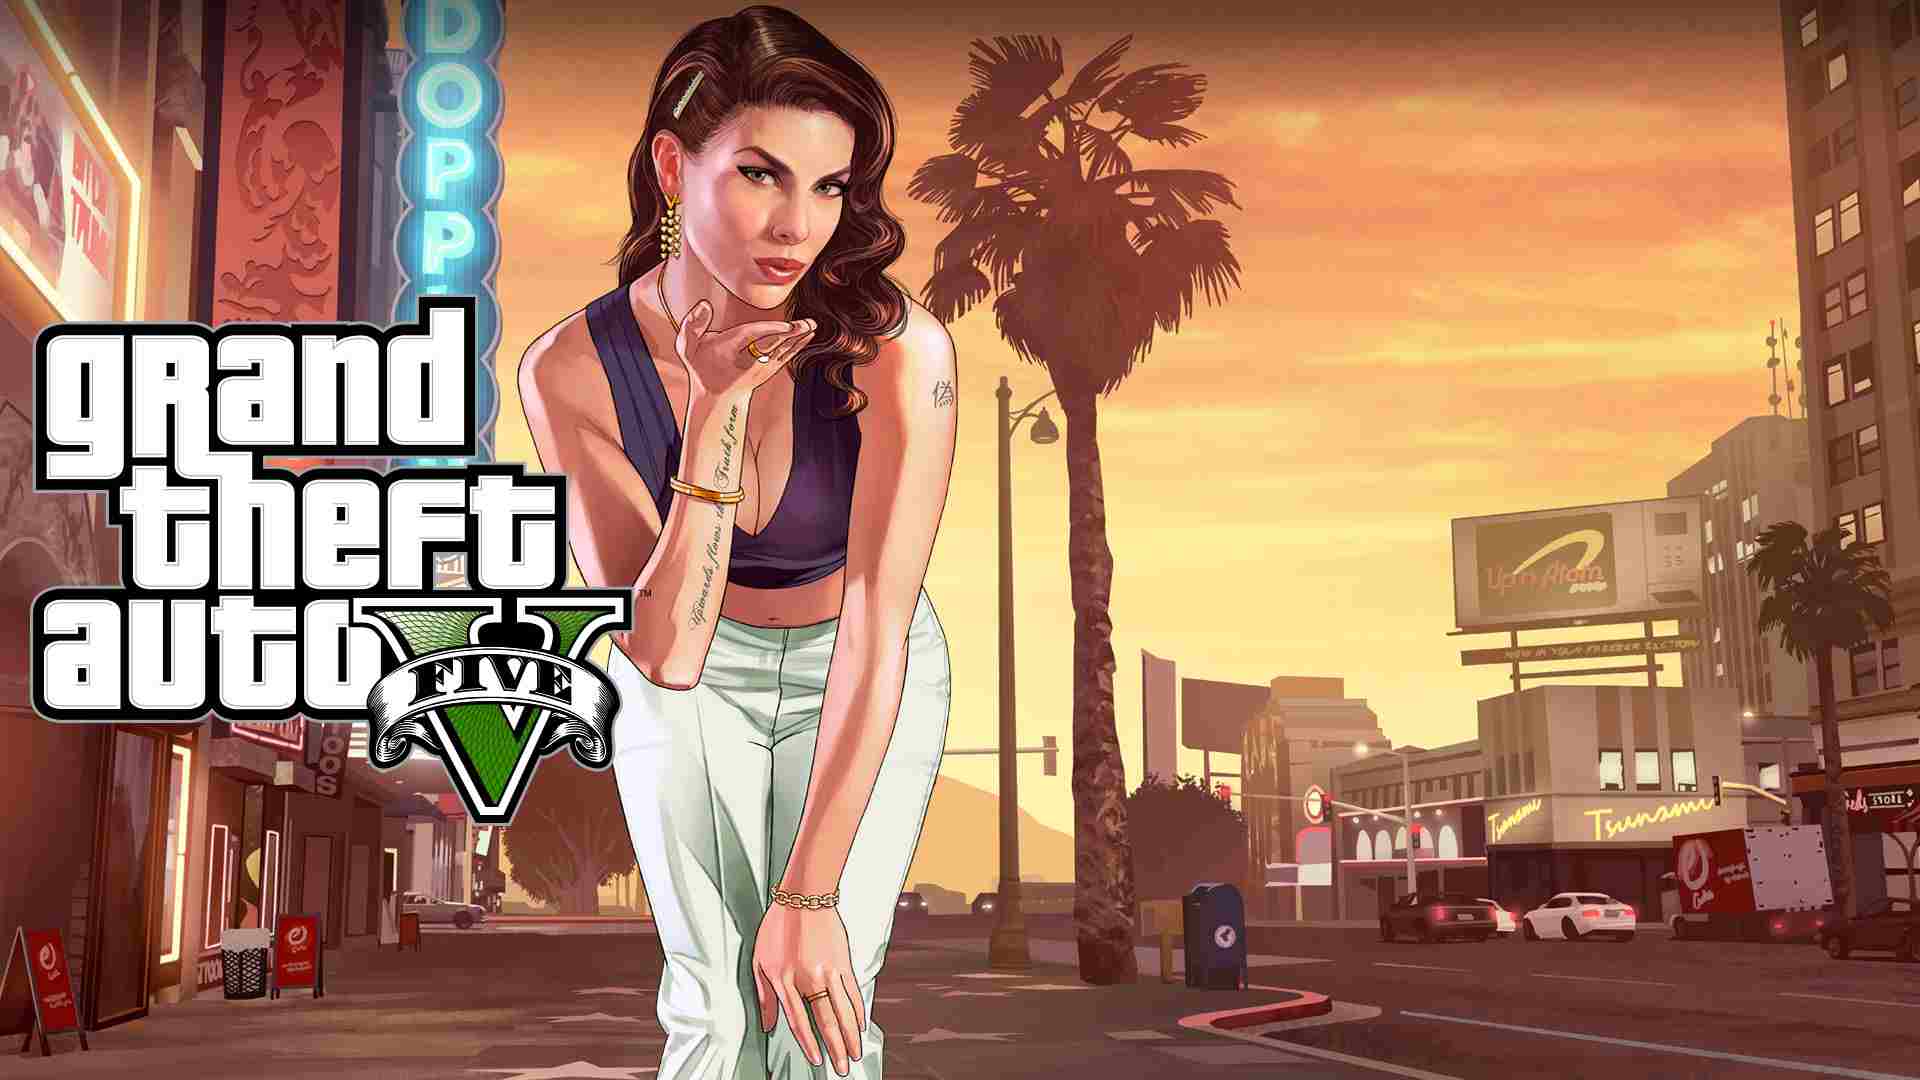 GTA 5 MOD APK Hack MOD – Grand Theft Auto V MOD (Tiền Full, Không Chết, Có Tất Cả) APK 2.0